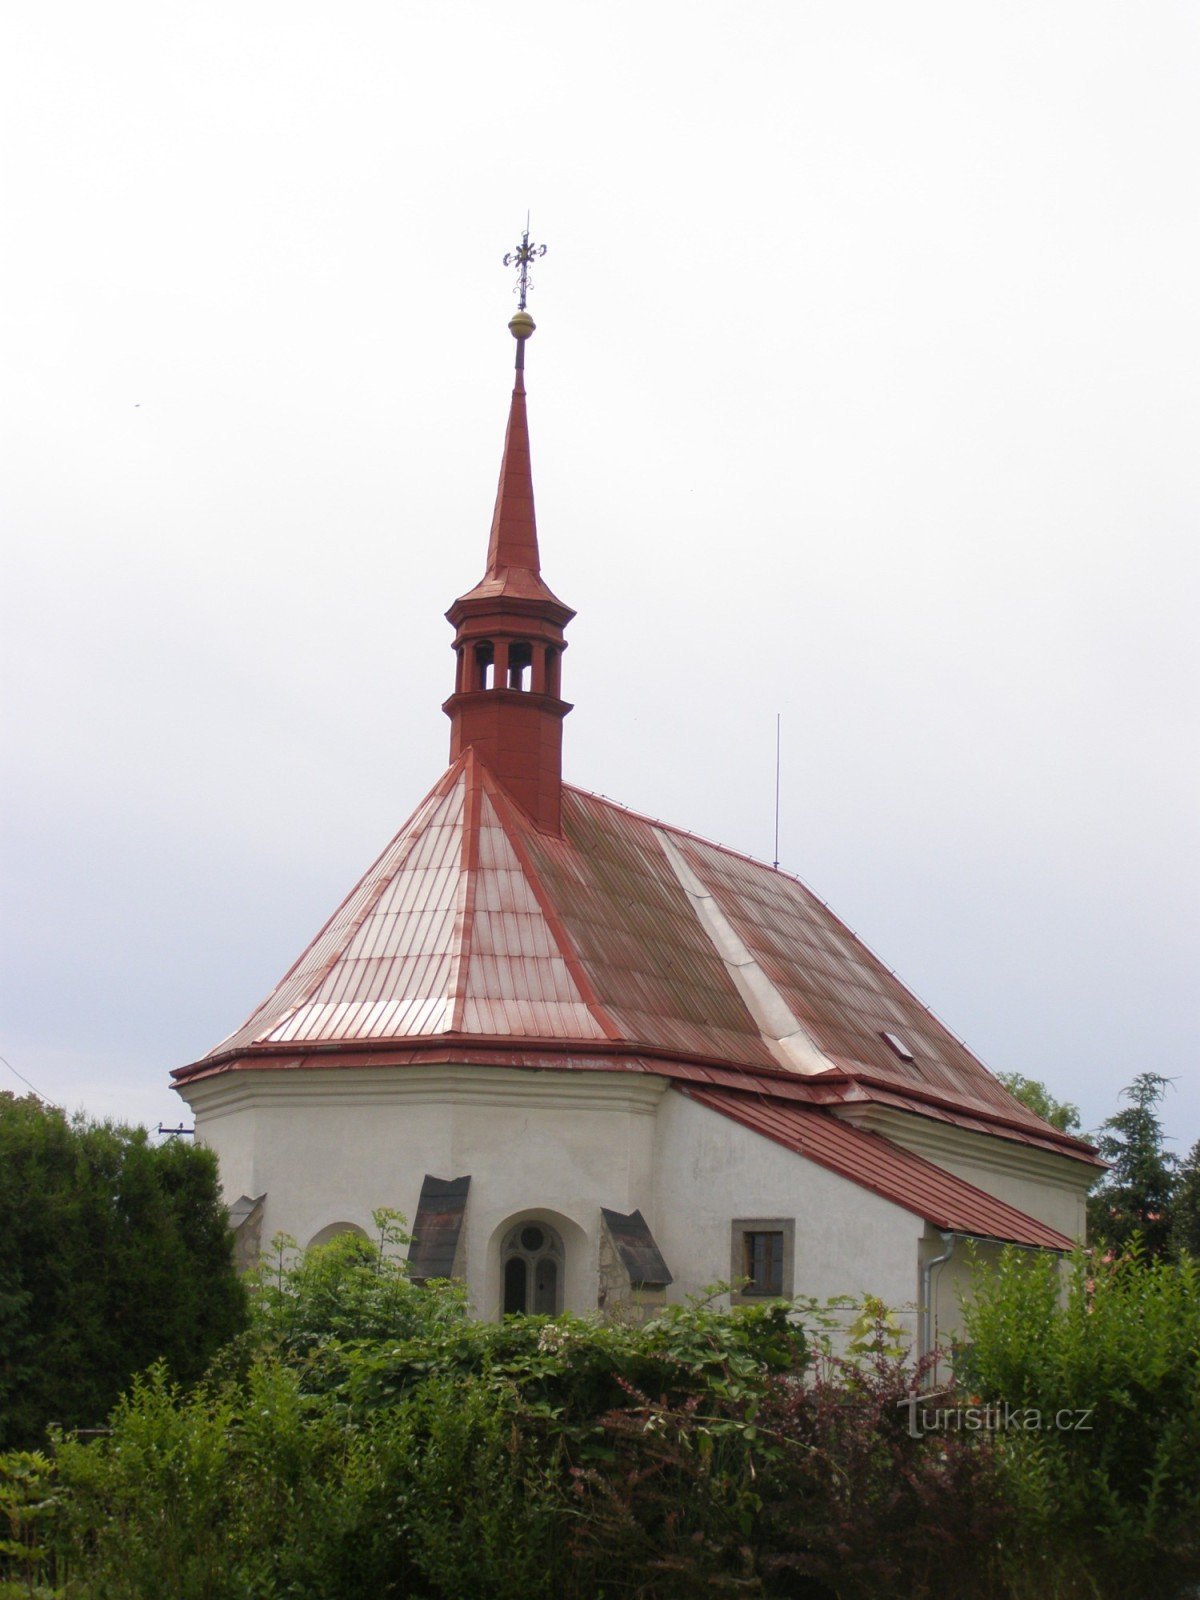 Mladějov - de kerk van St. Giljí met de klokkentoren